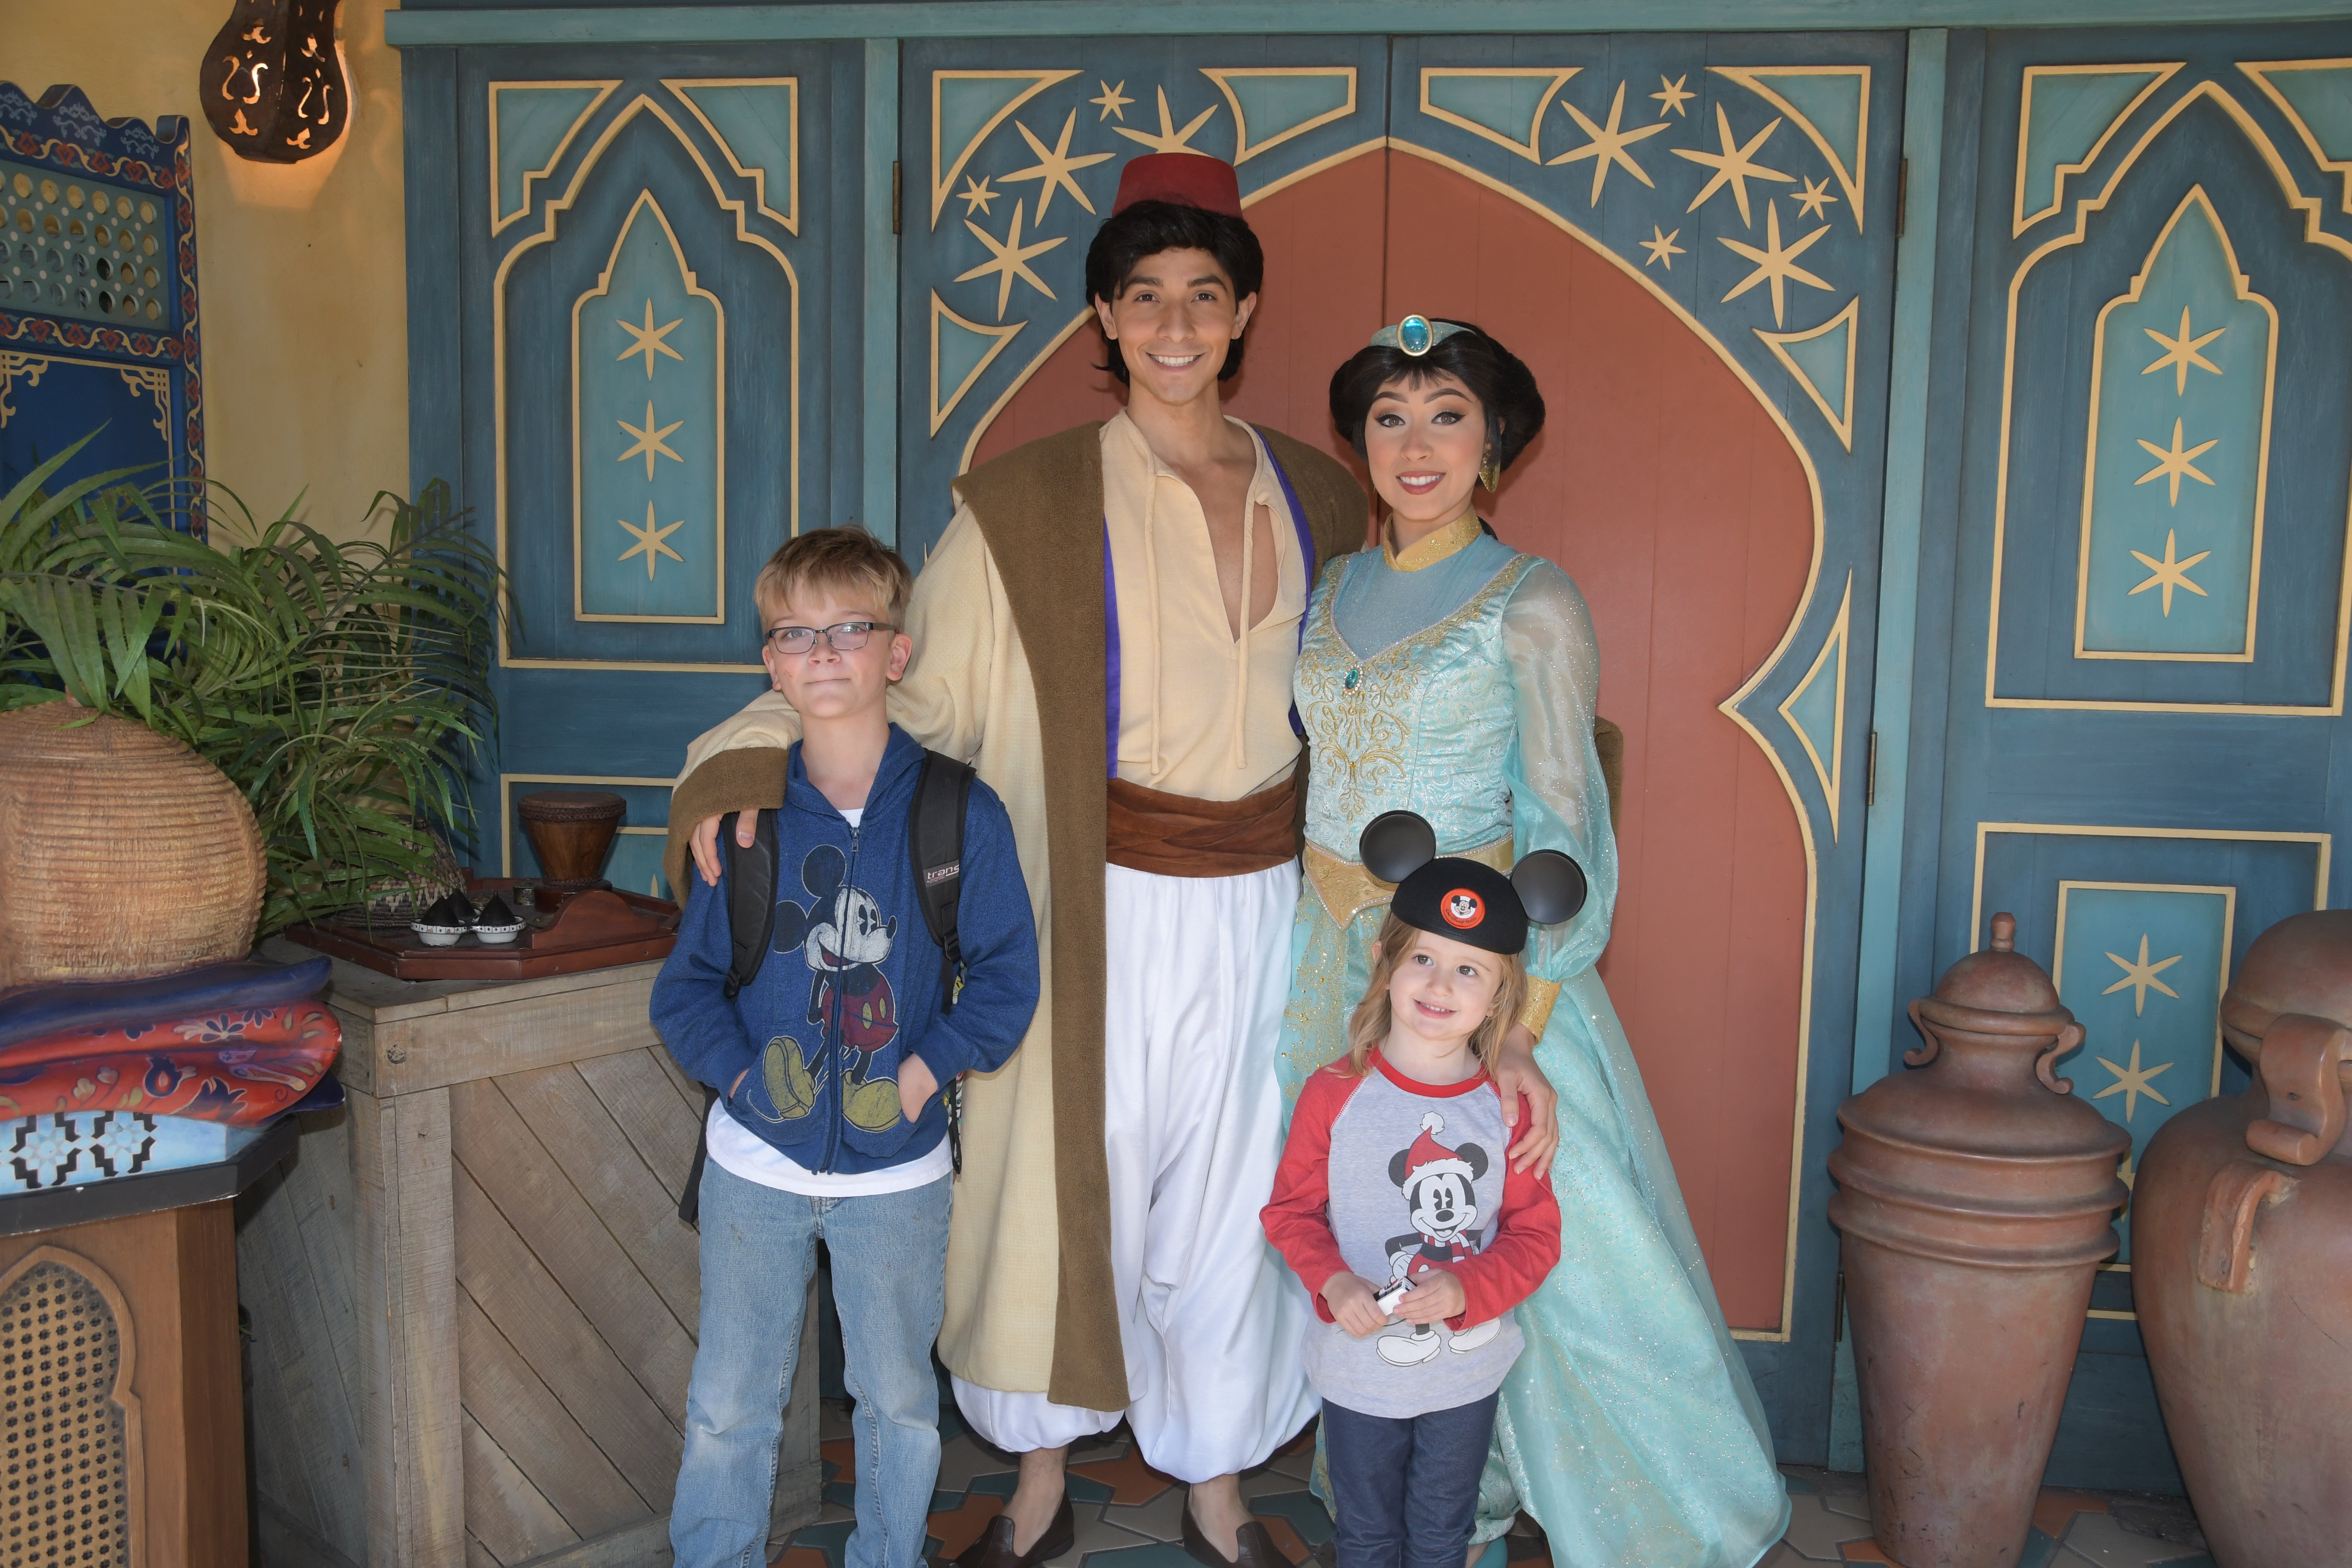 Meeting Jasmine and Aladdin at the Magic Kingdom